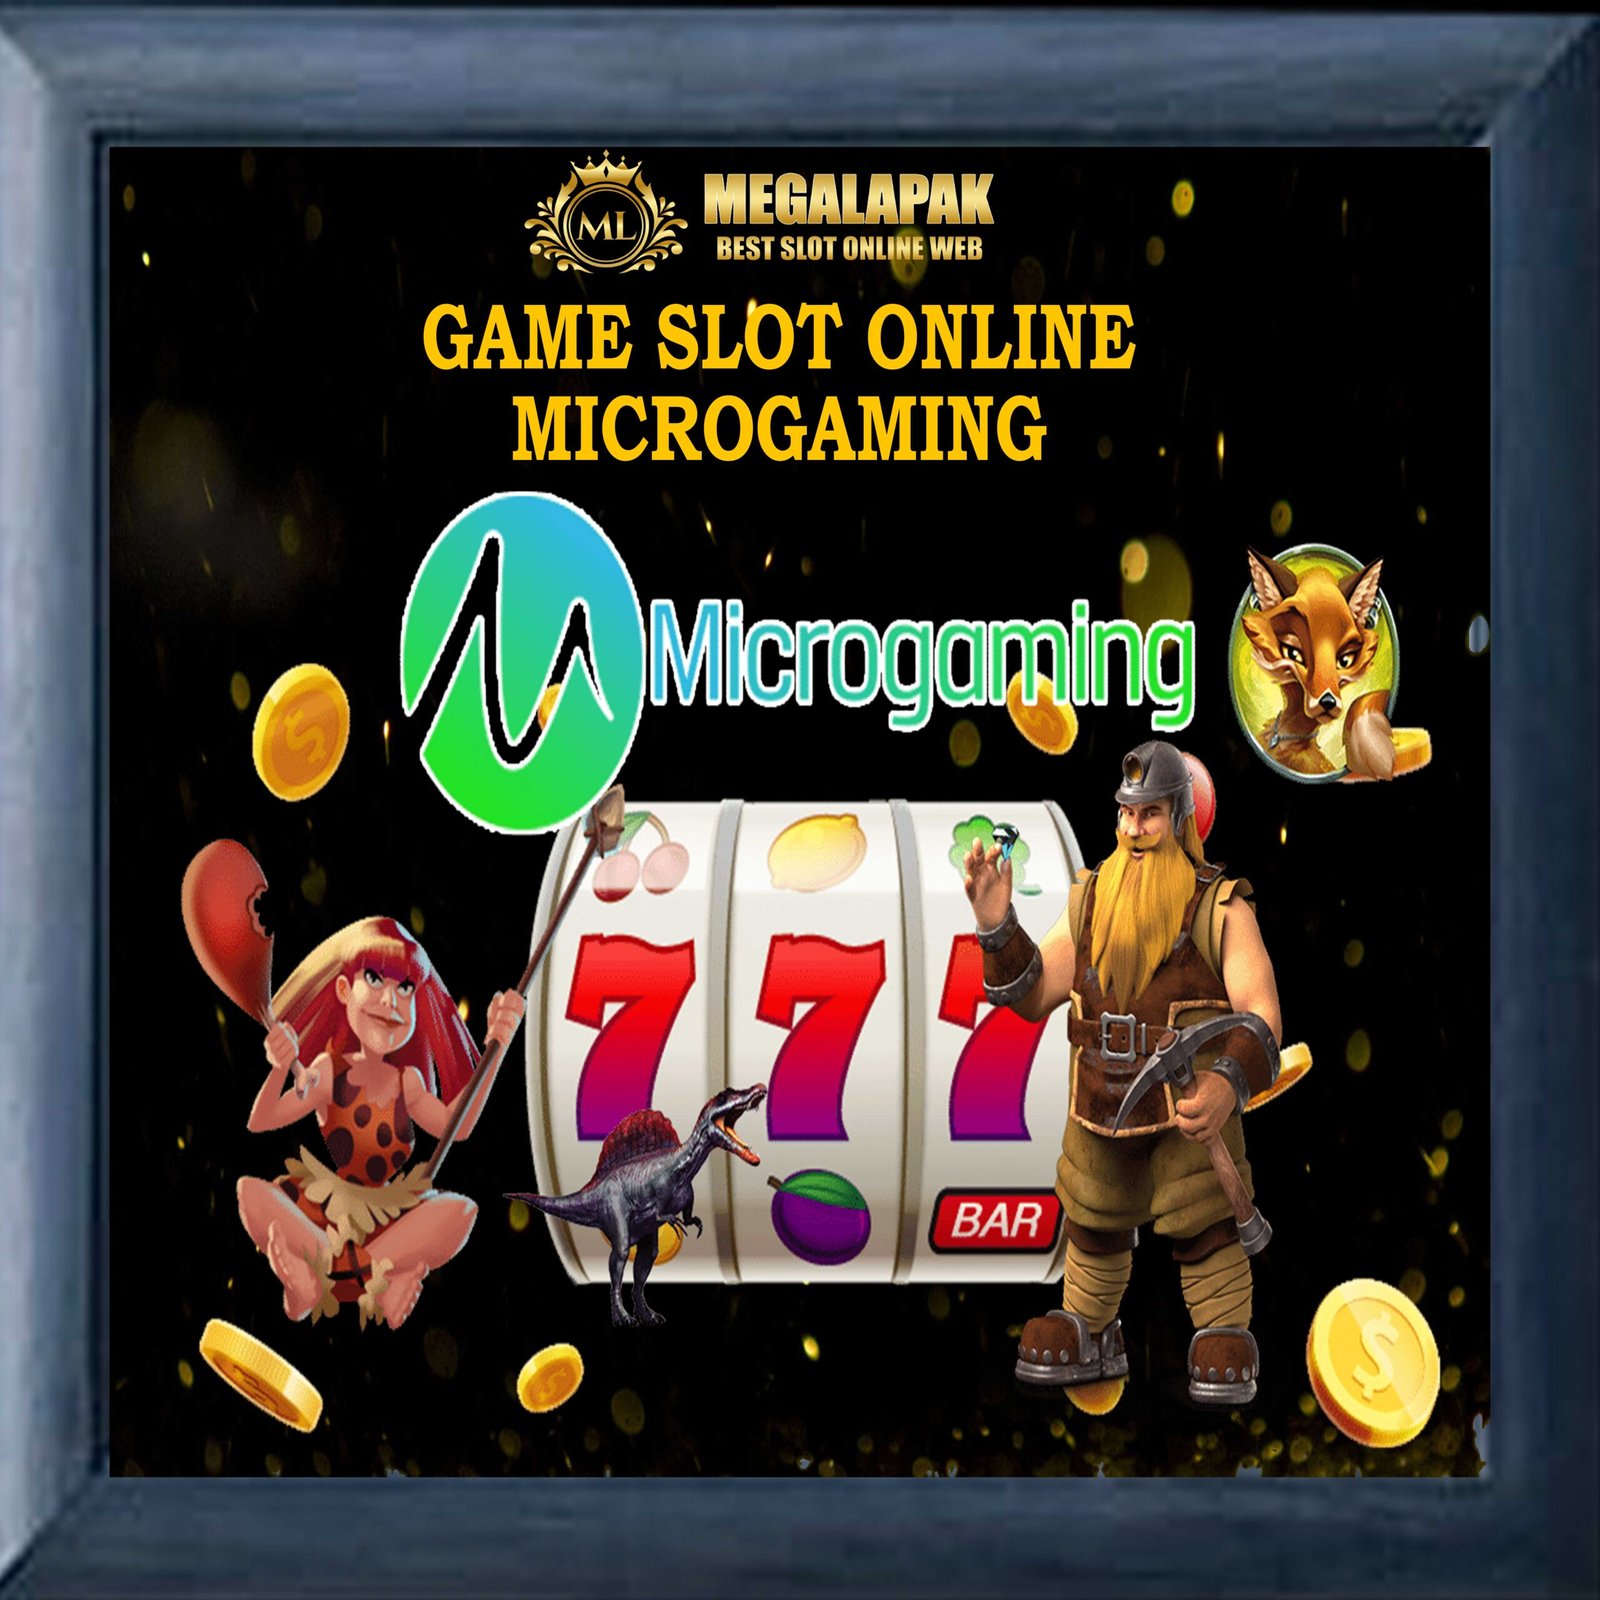 Slot Online Microgaming Megalapak